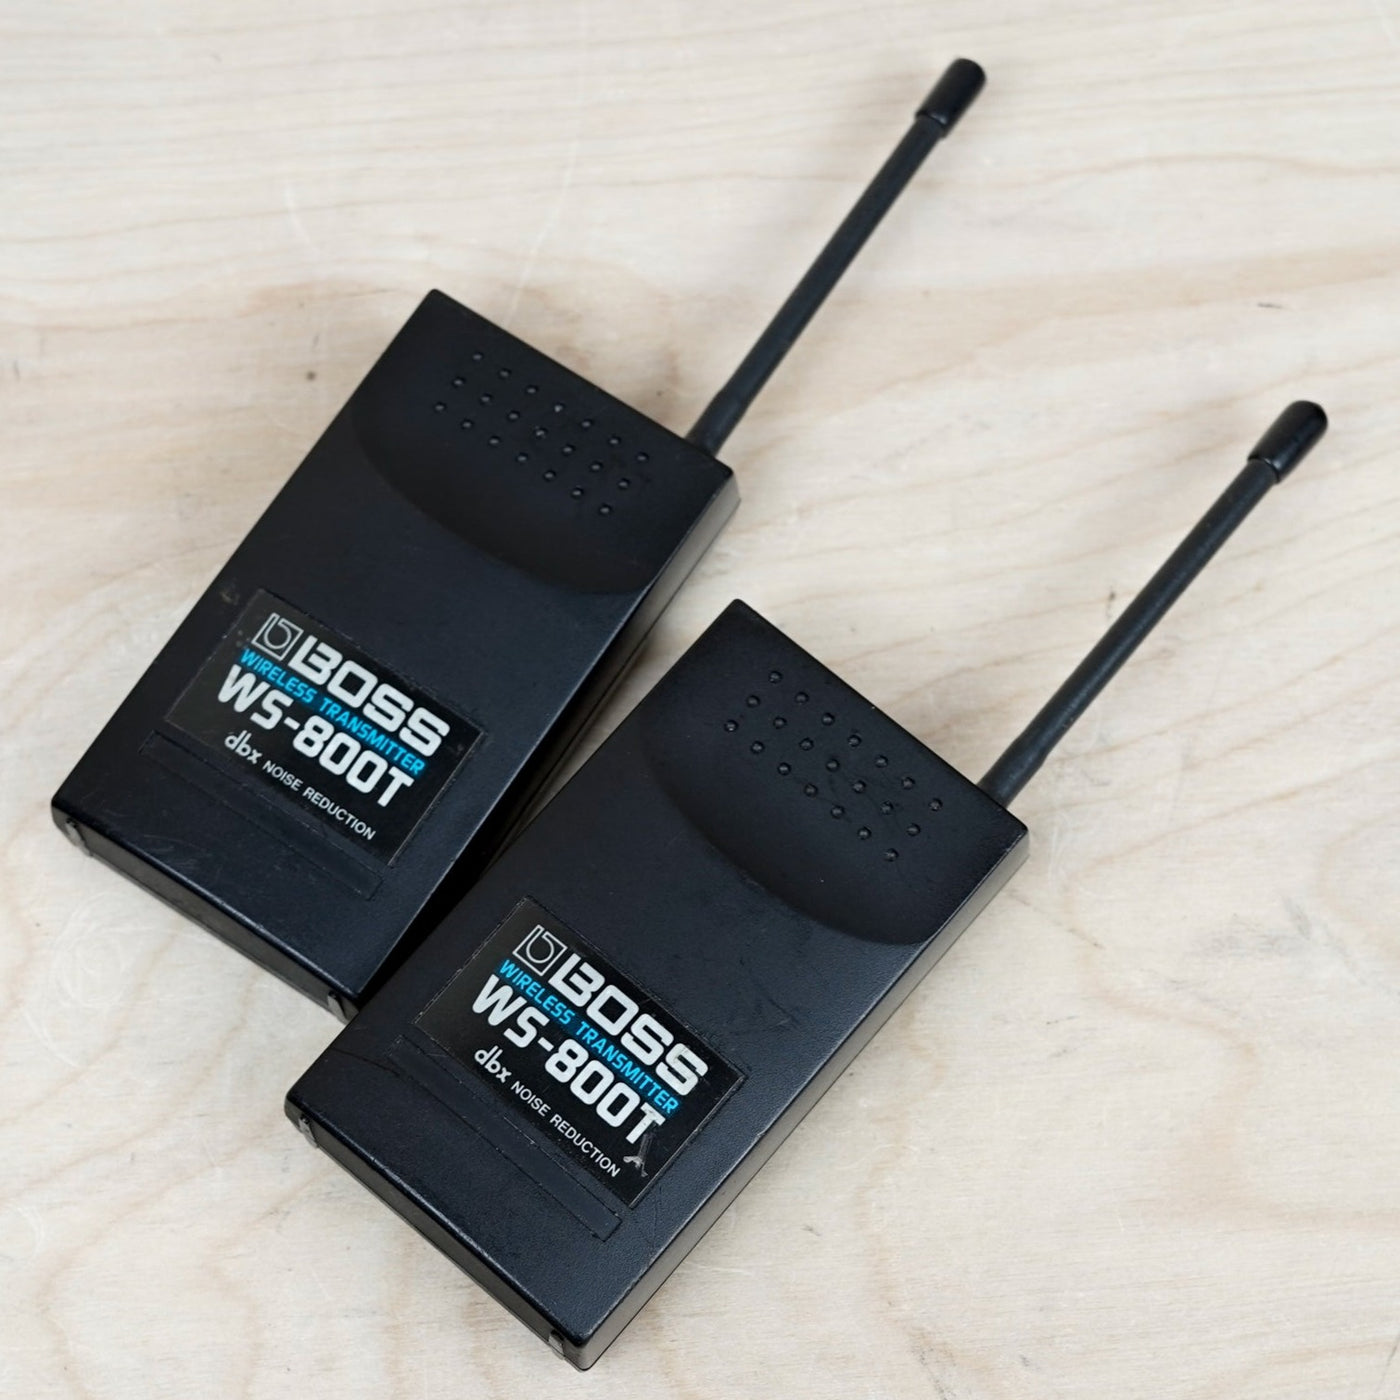 Boss WS-800T Wireless Transmitter Pair